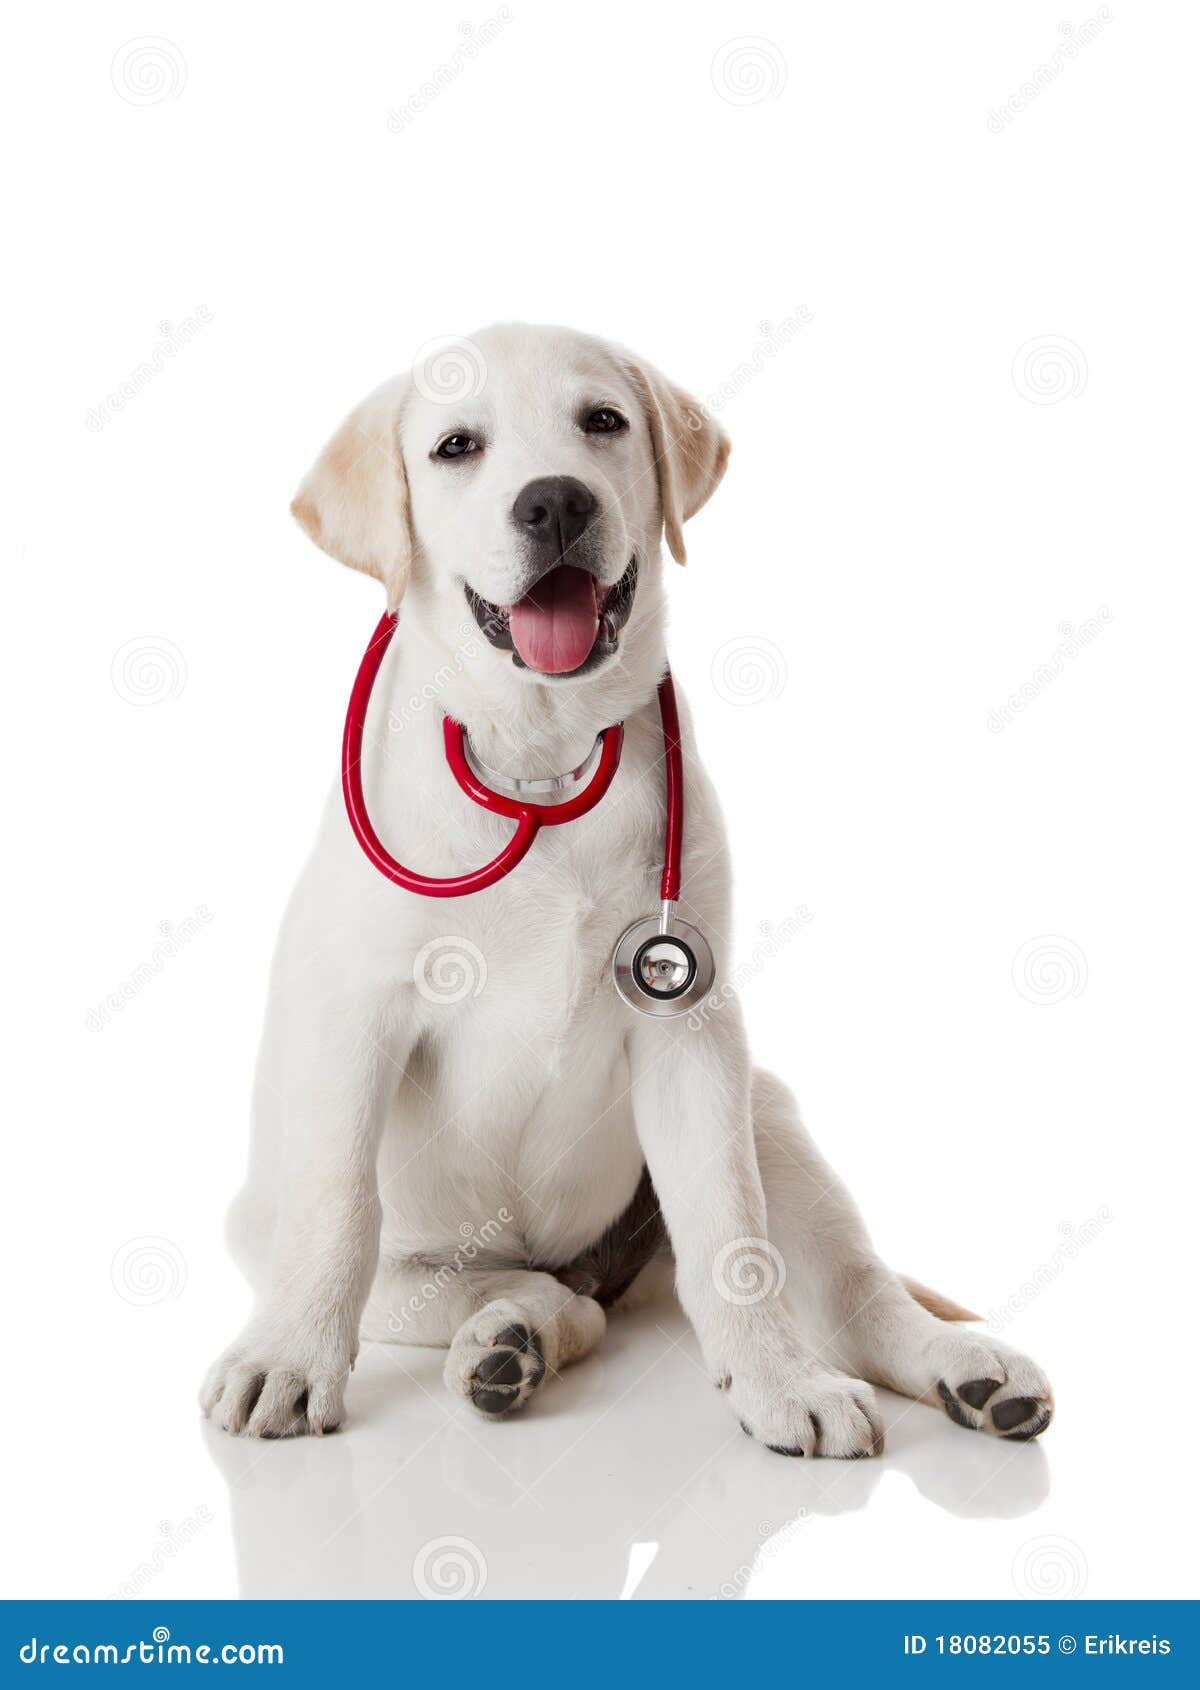 Veterinarian dog stock image. Image of portrait, breed ...